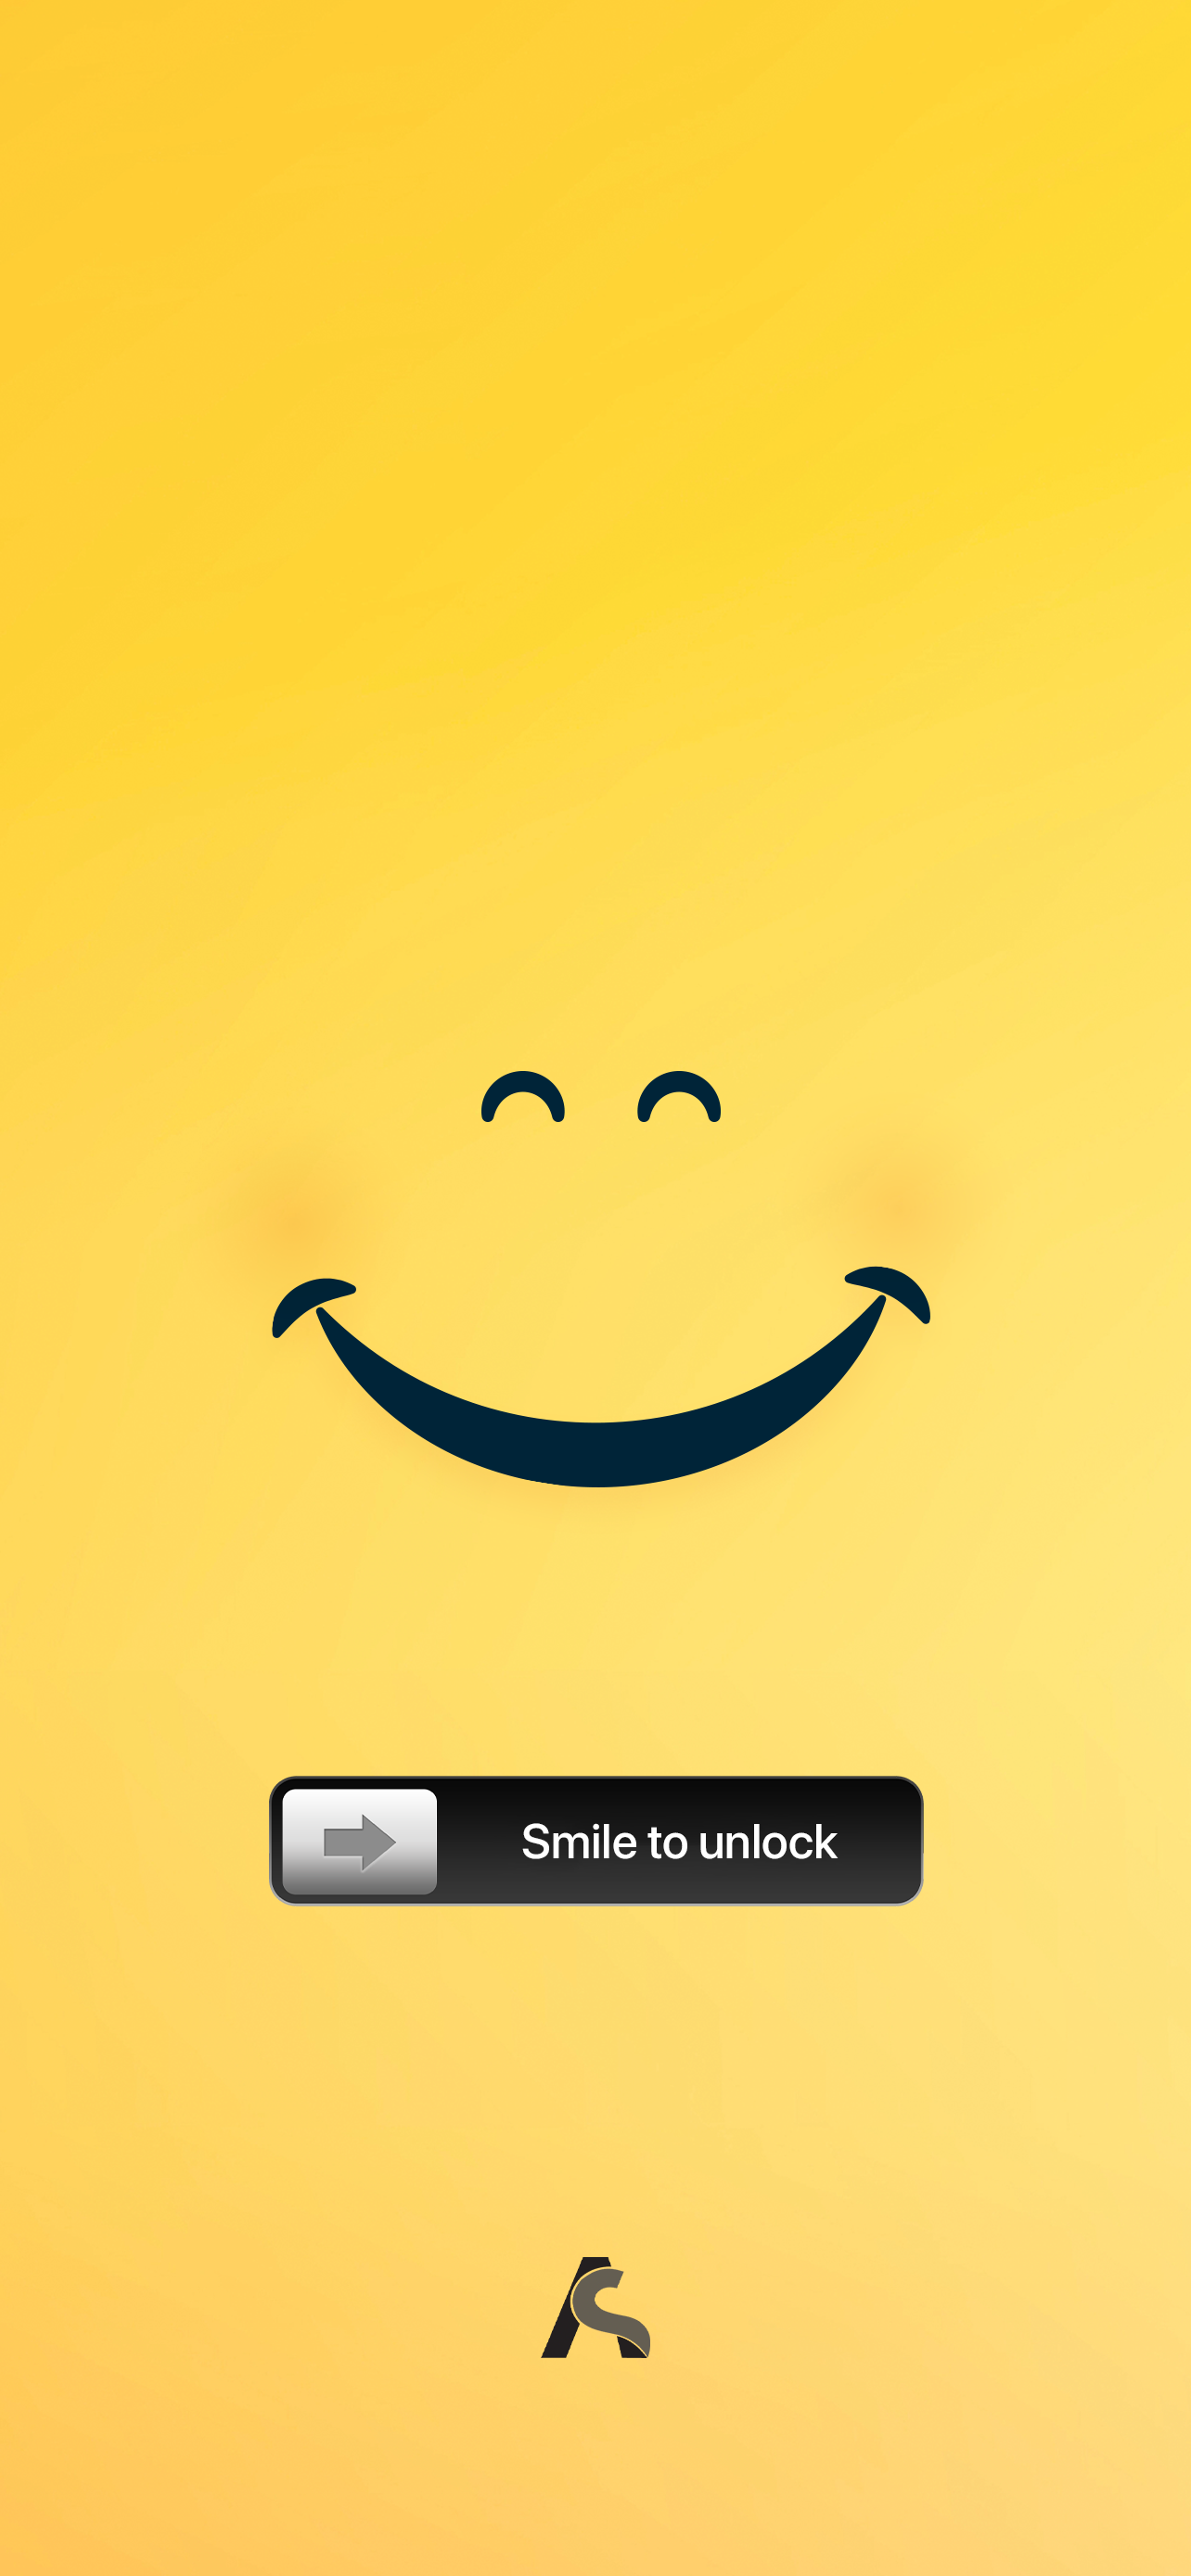 Smile to unlock iphone wallpaper free download